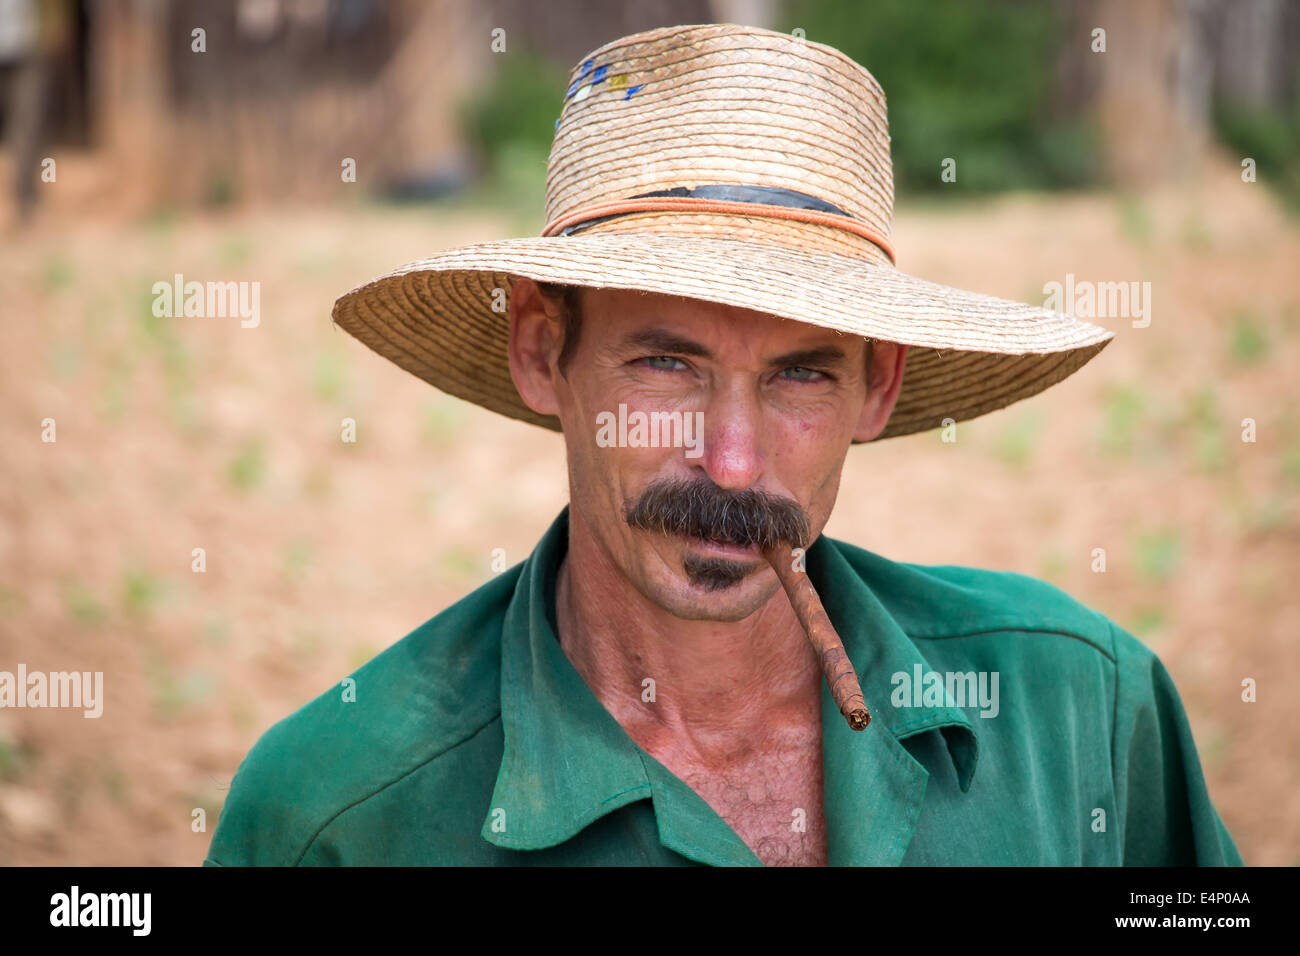 Landwirt mit Zigarre im Mund Tabak Arbeitsfeld, Valle de Viñales, Pinar del Río Provinz, Kuba. Stockfoto